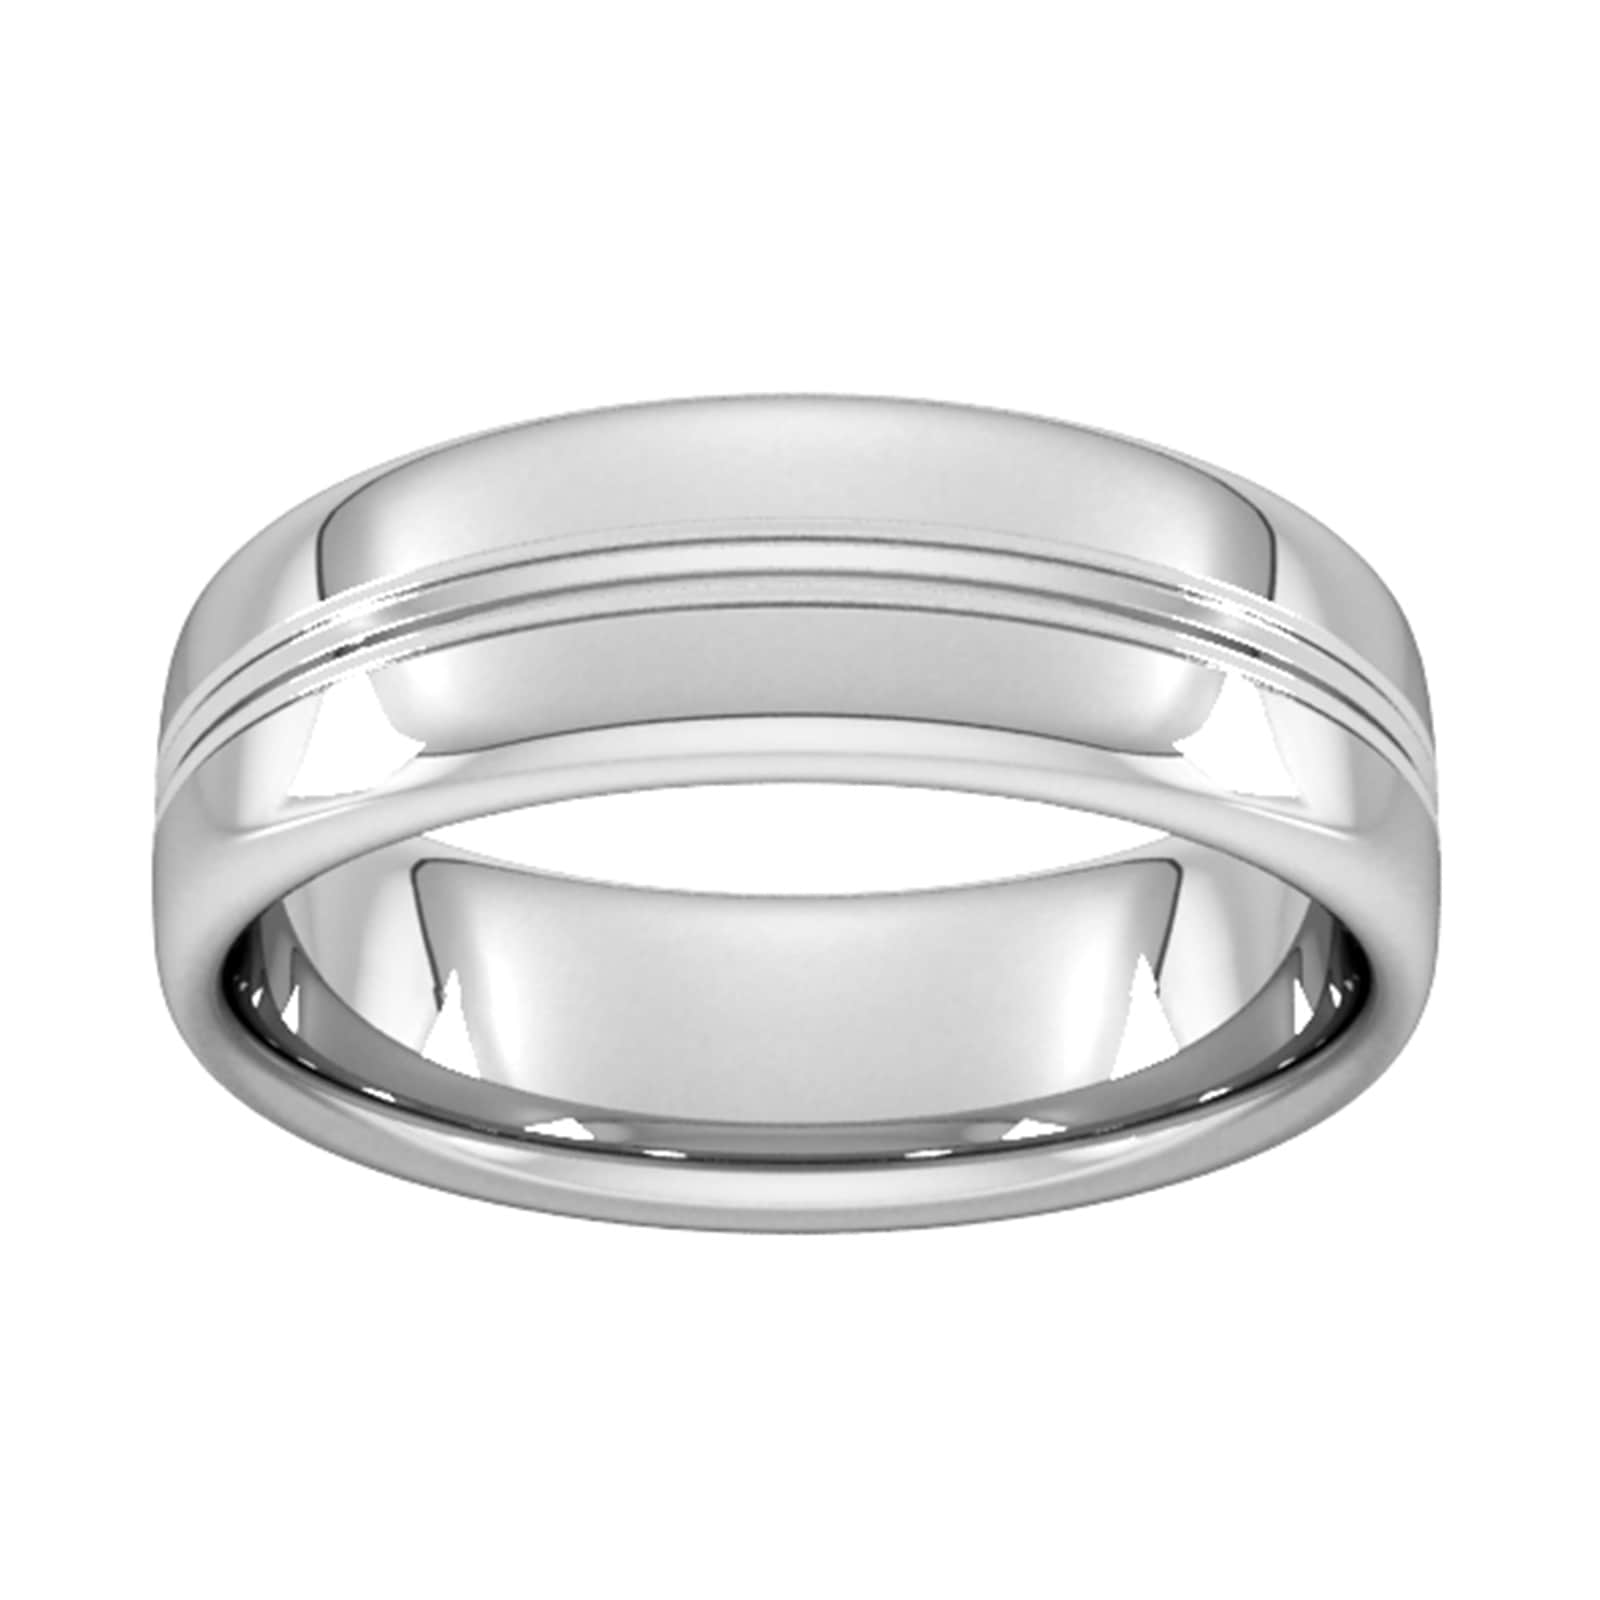 7mm Slight Court Heavy Grooved Polished Finish Wedding Ring In 950 Palladium - Ring Size U